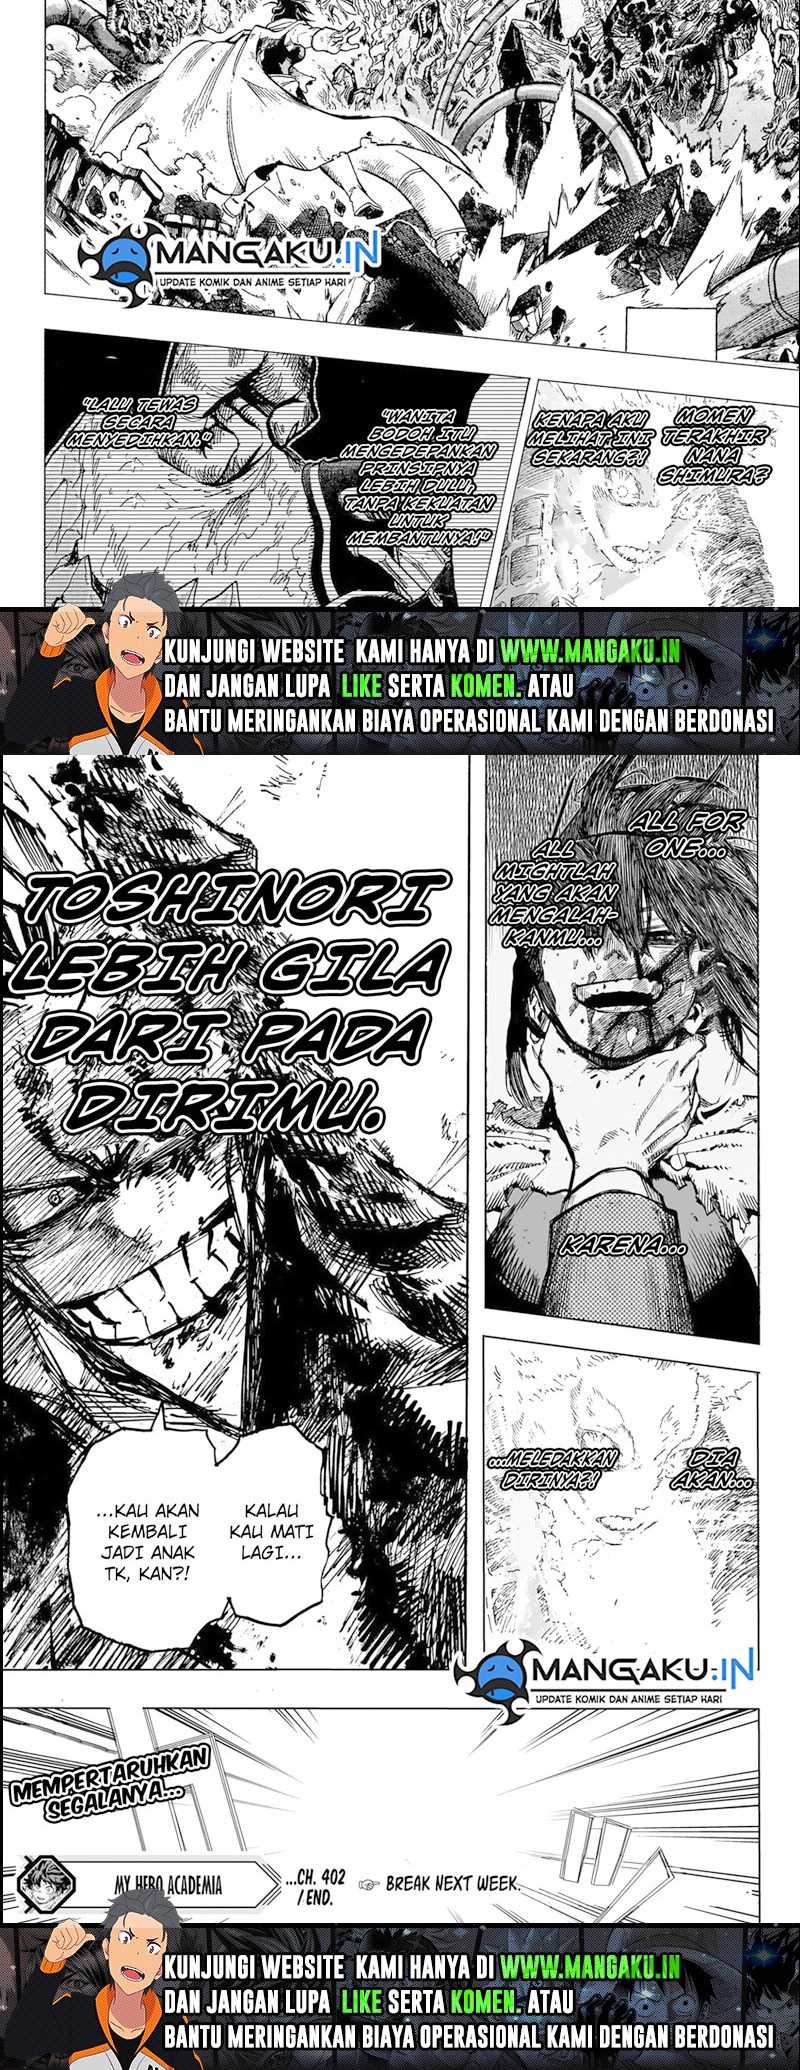 Baca Manga My Hero Academia Chapter 402 Bahasa Indonesia, Full Spoiler dan  Raw Scan, Upaya Akhir All Migh - Info 1